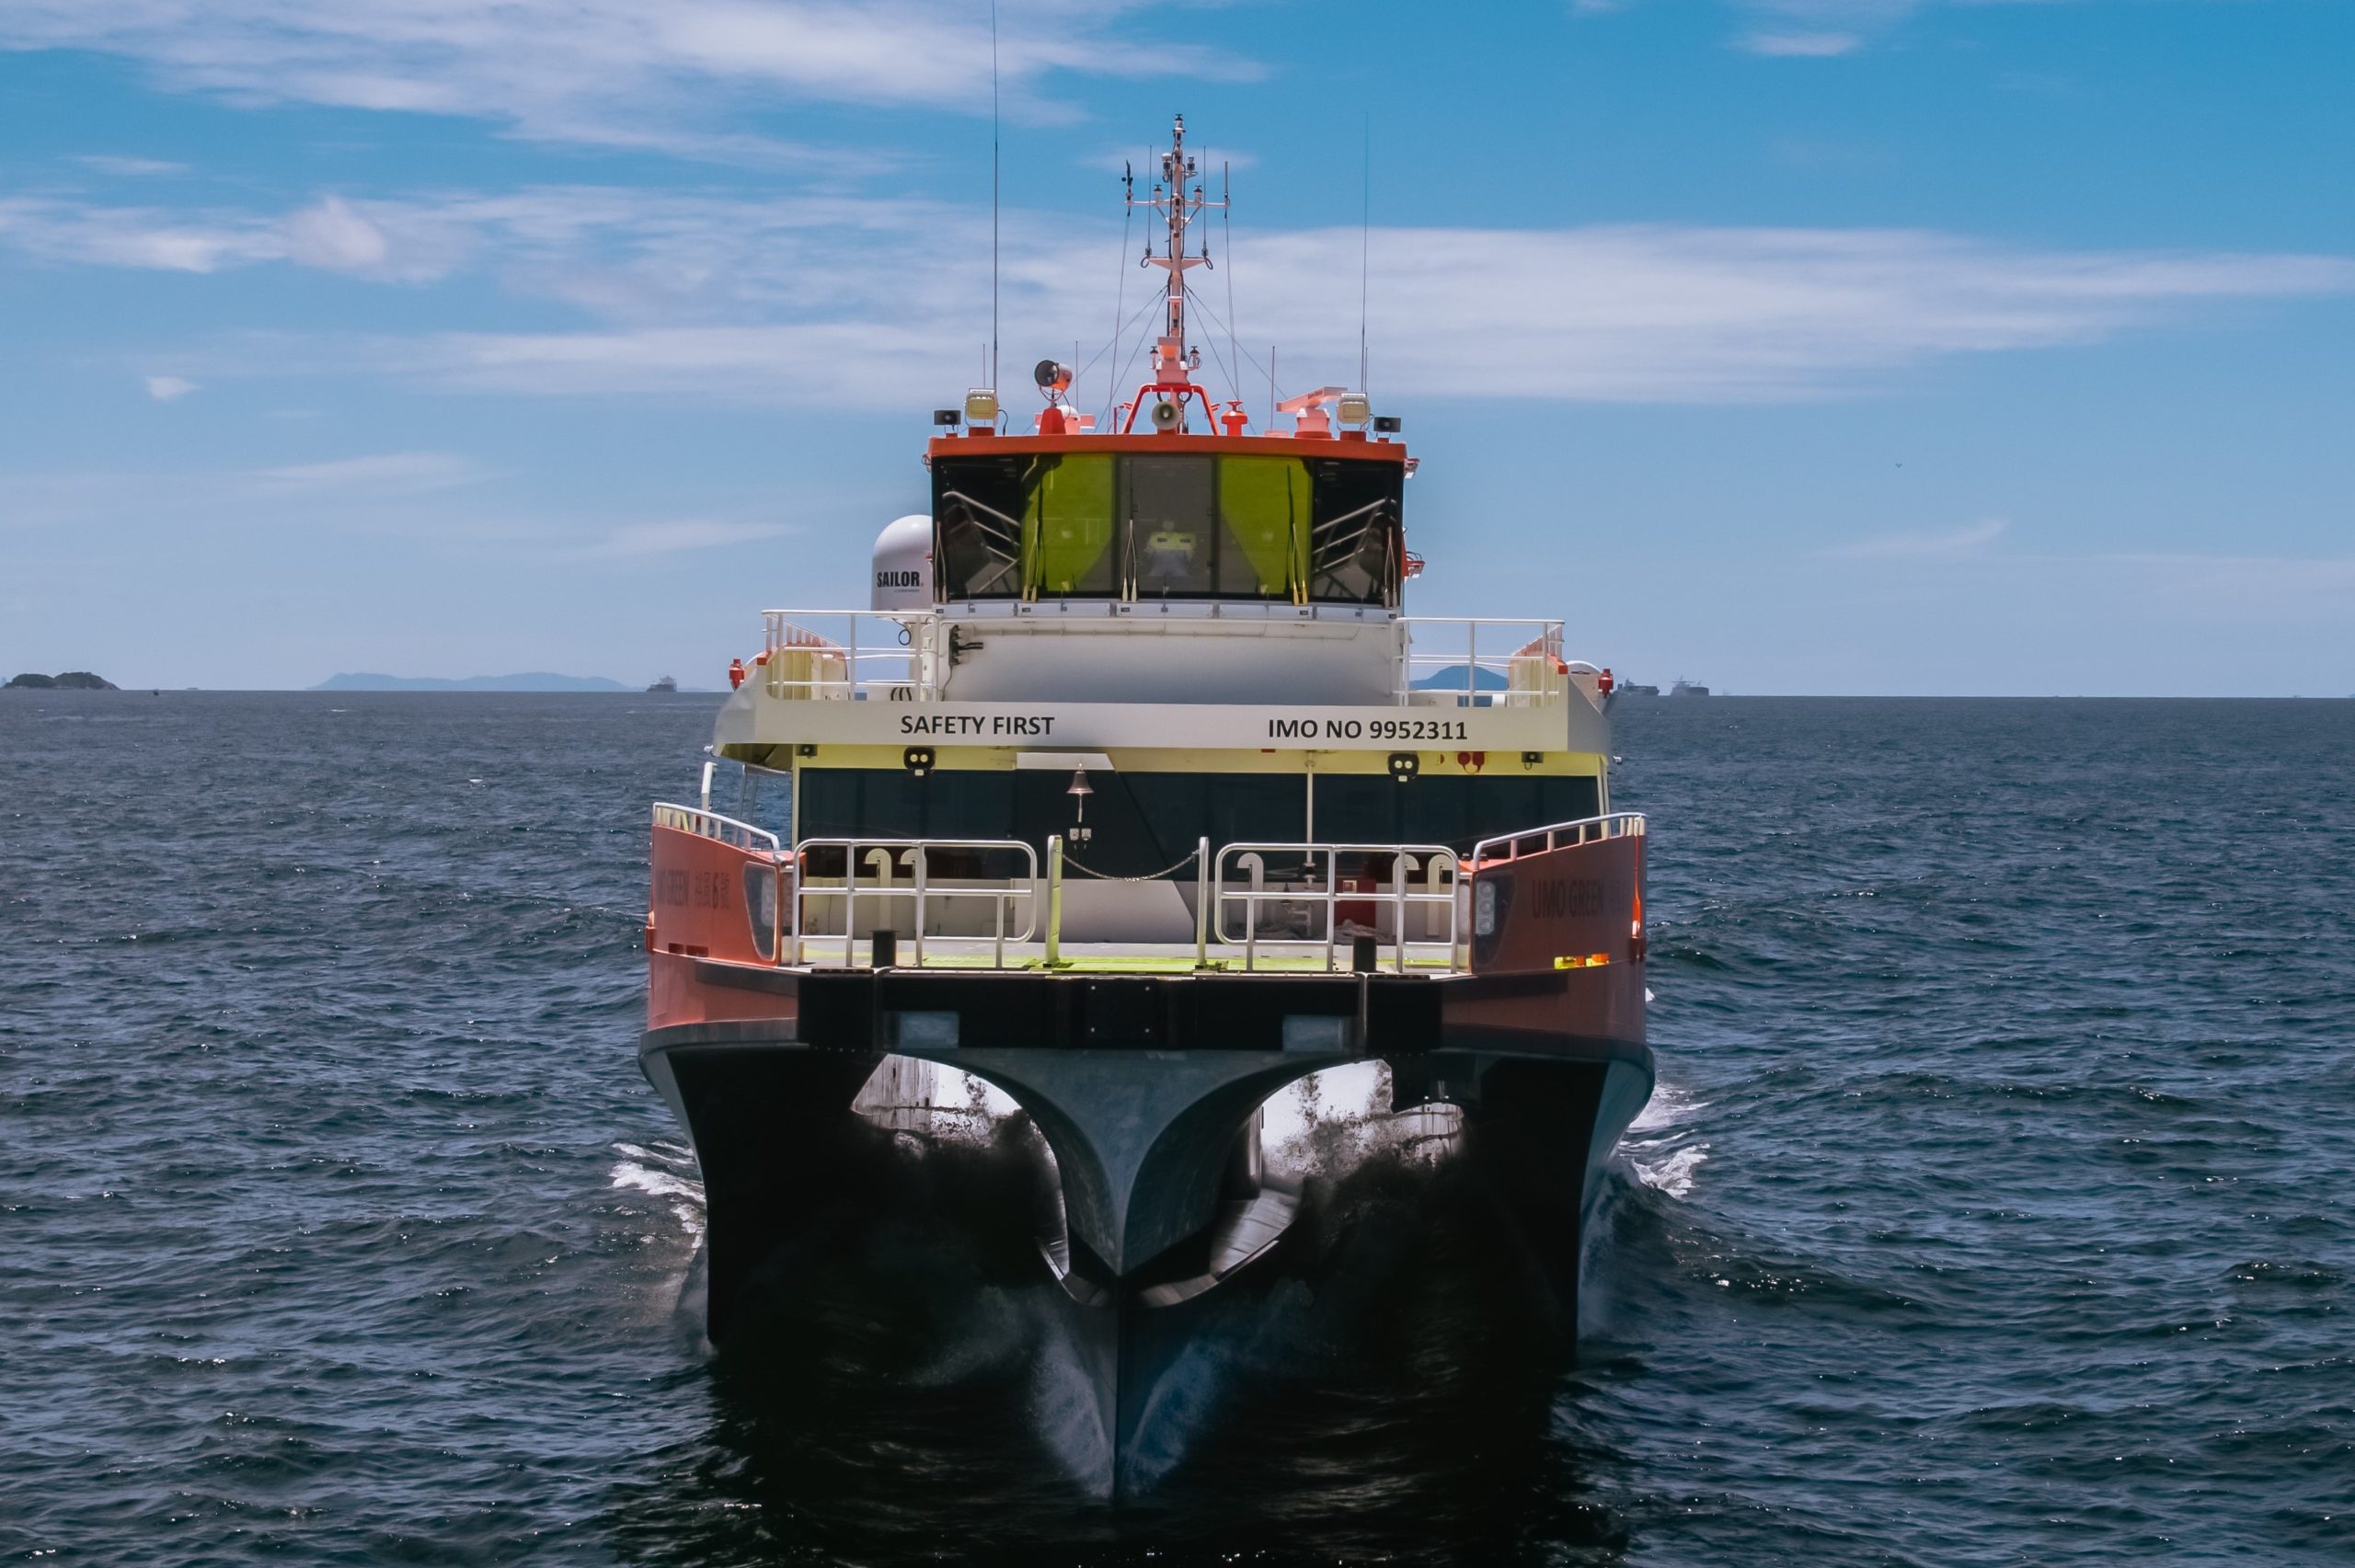 trimaran crew transfer vessel